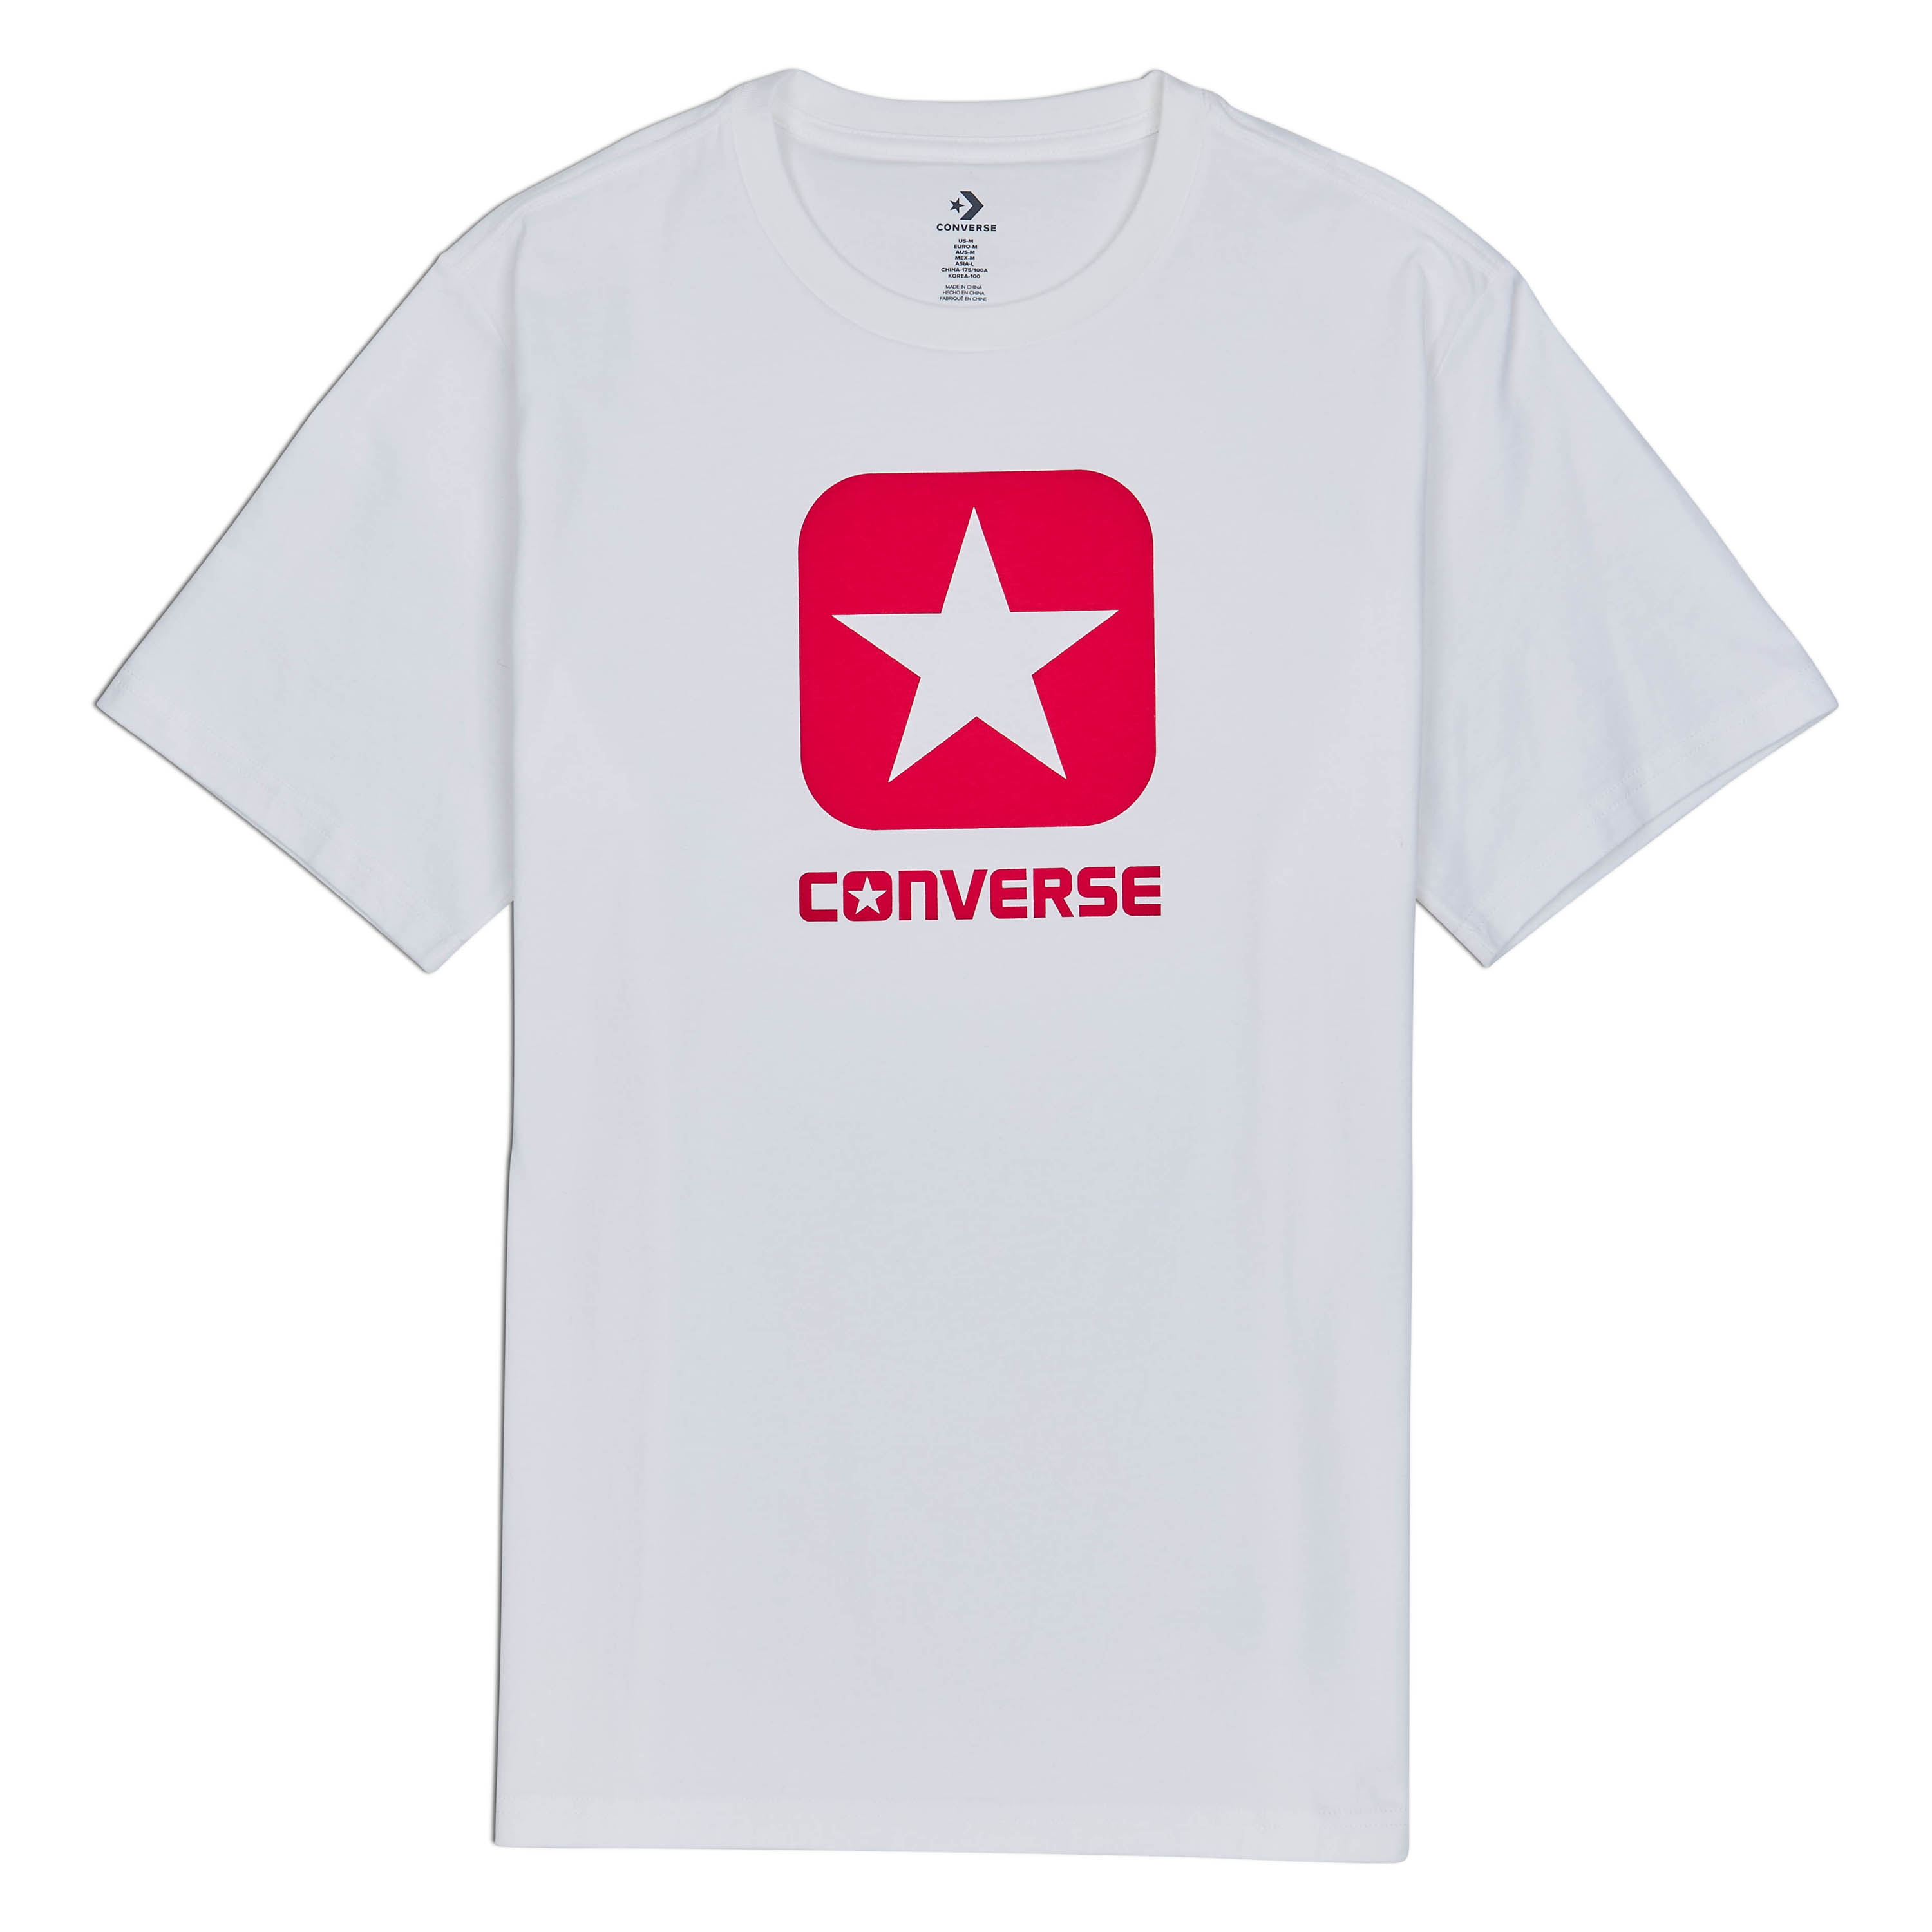 converse shirt price philippines